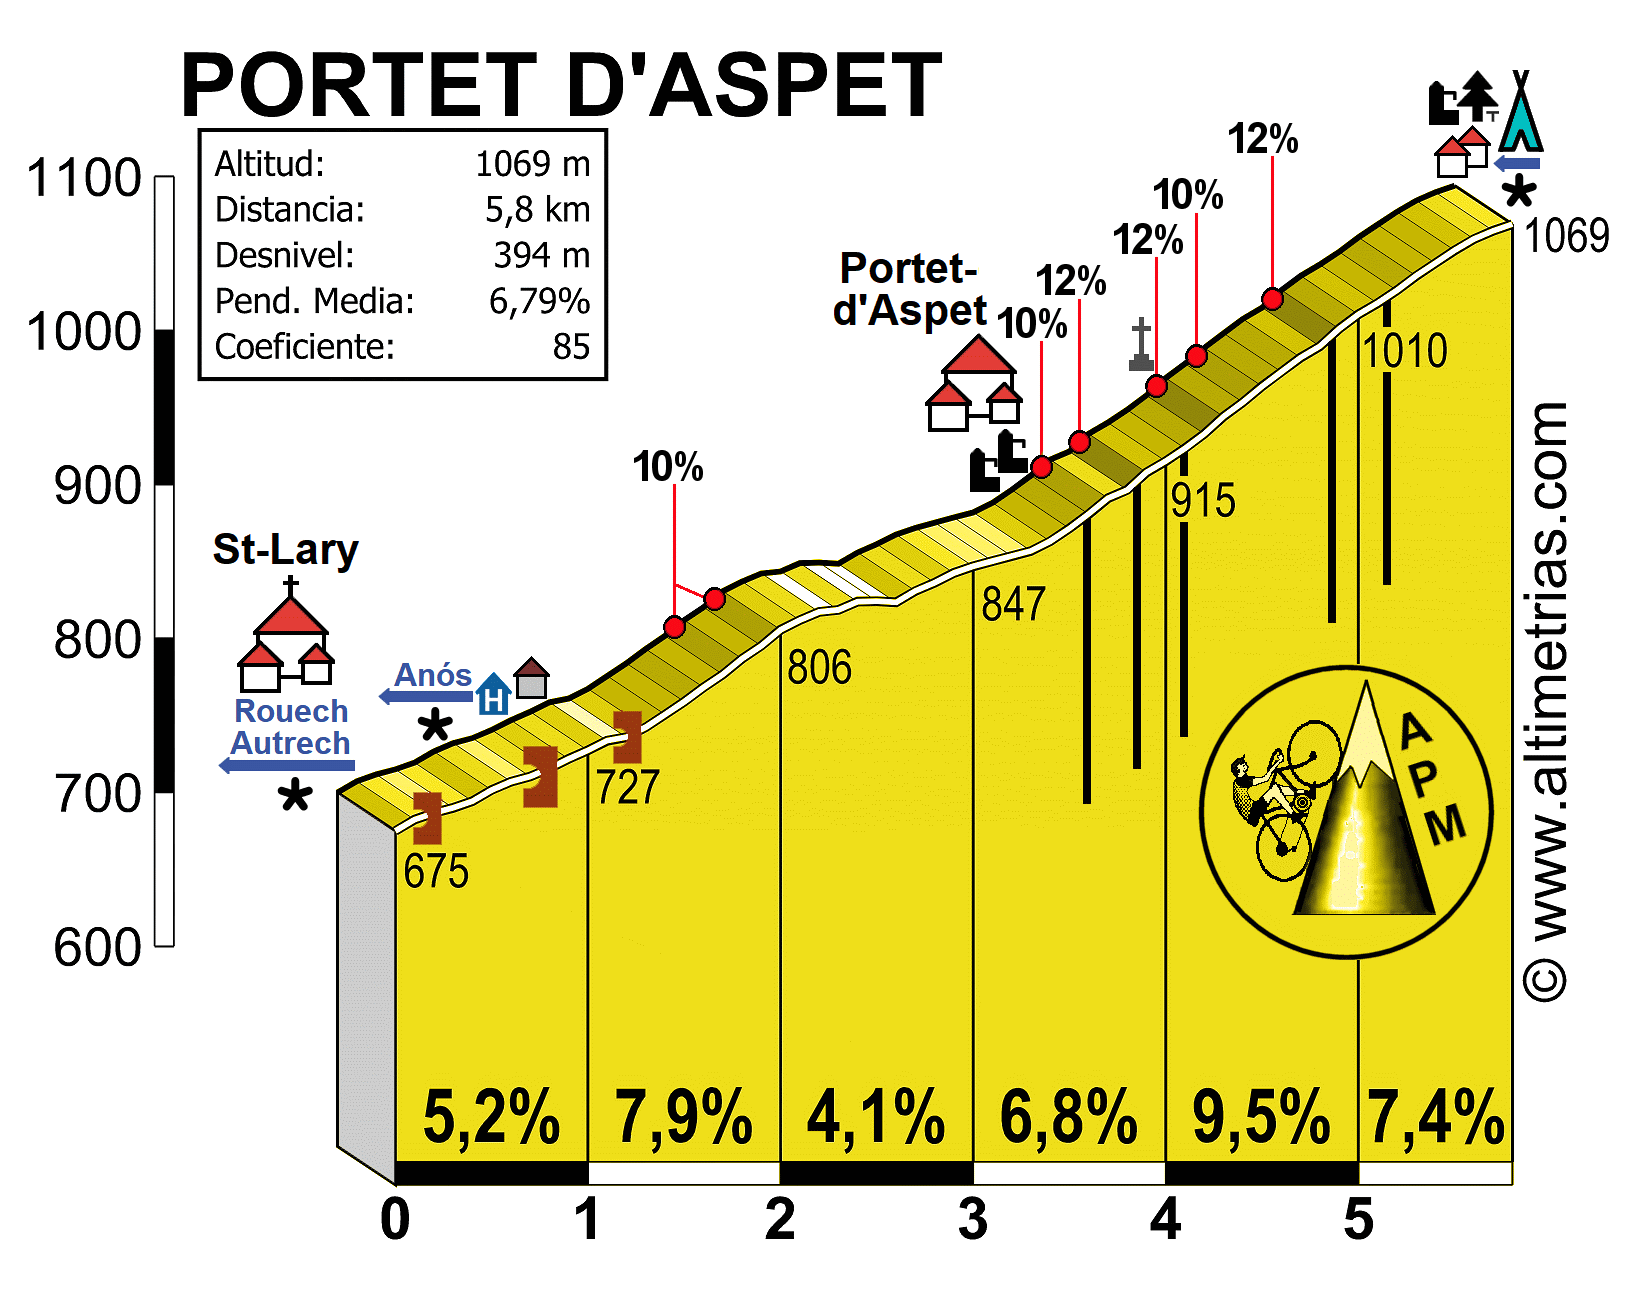 PORTET D'ASPET, por St-Lary